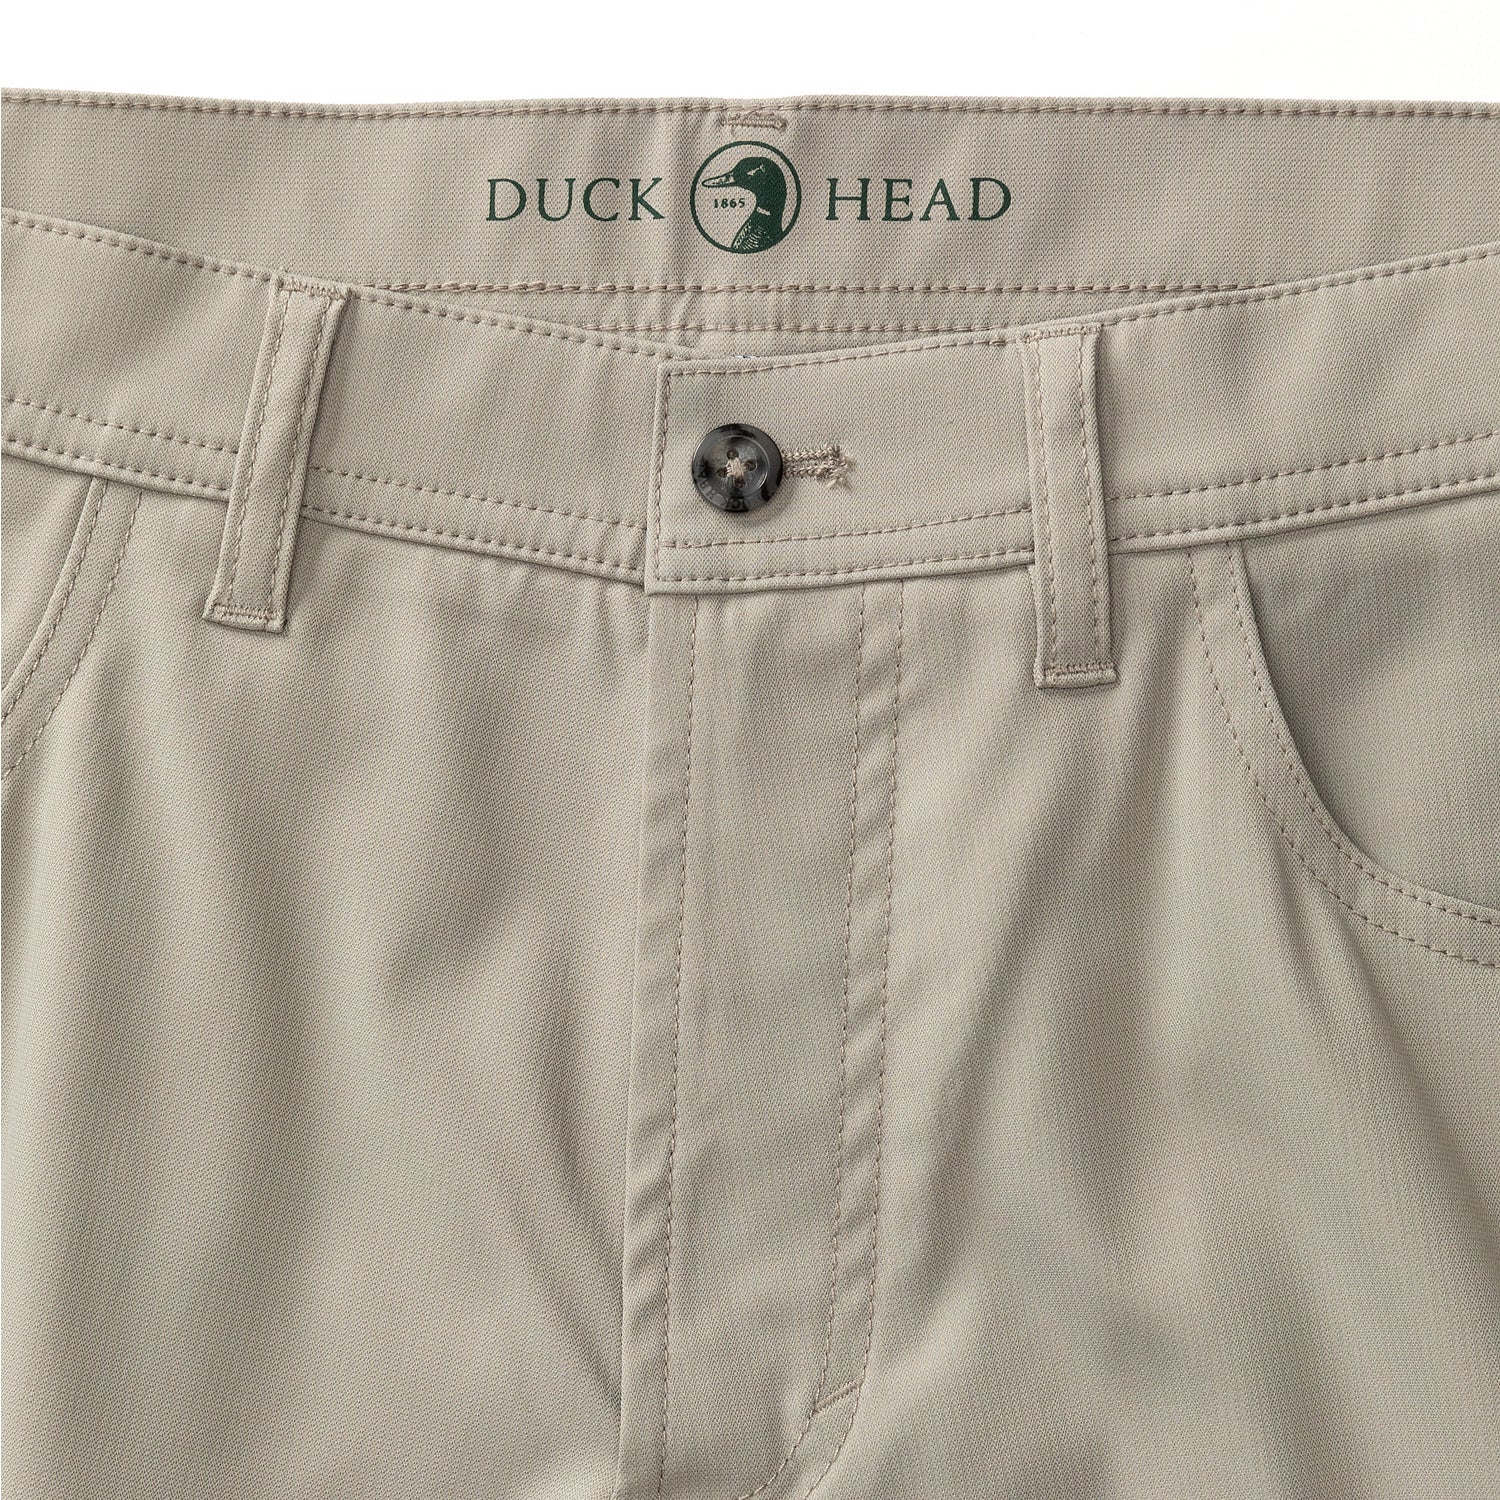 Duck Head Long Drive Performance 5-Pocket pant